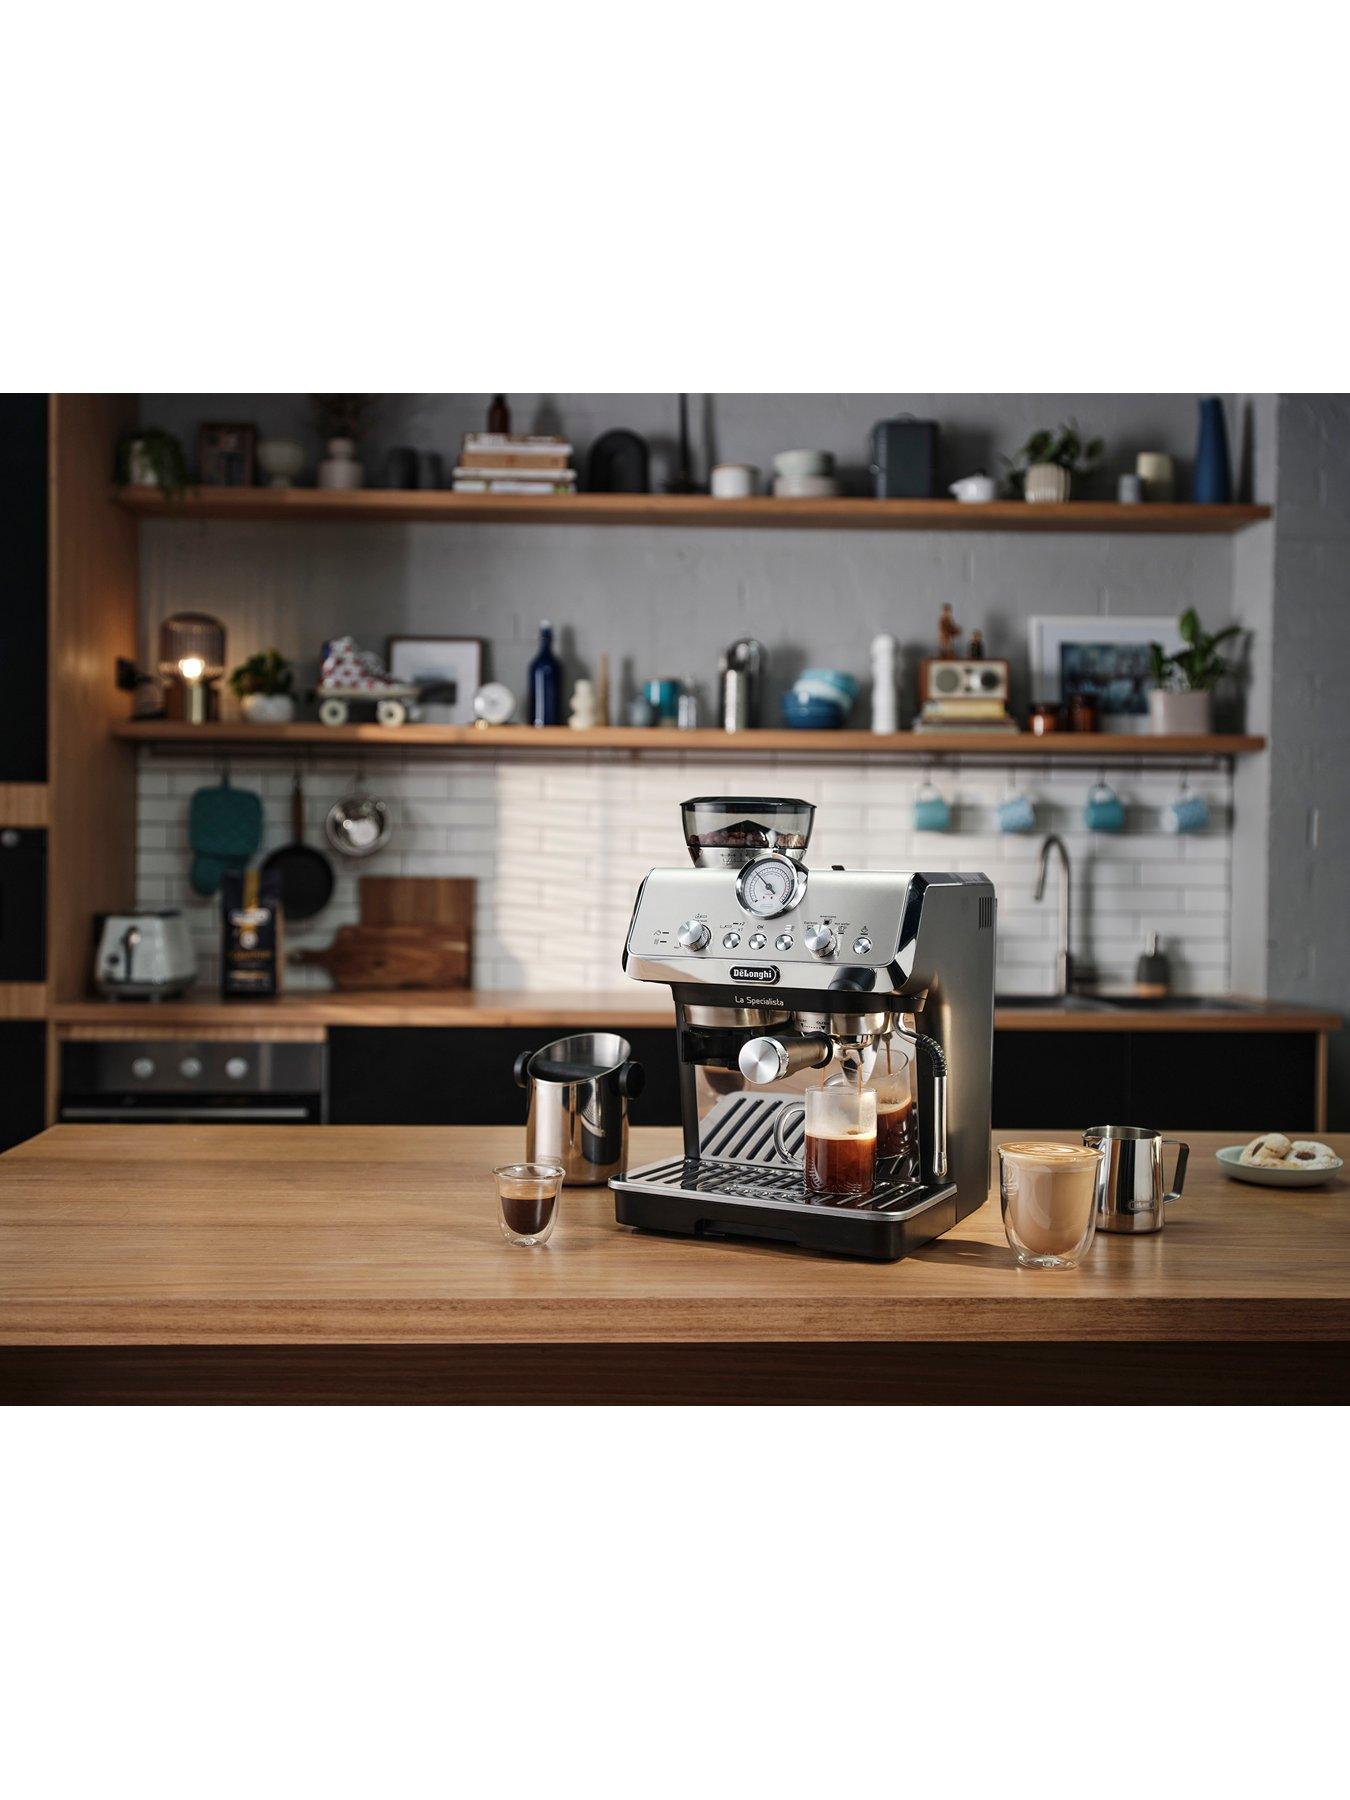 La Specialista Arte, De'Longhi Espresso Machine